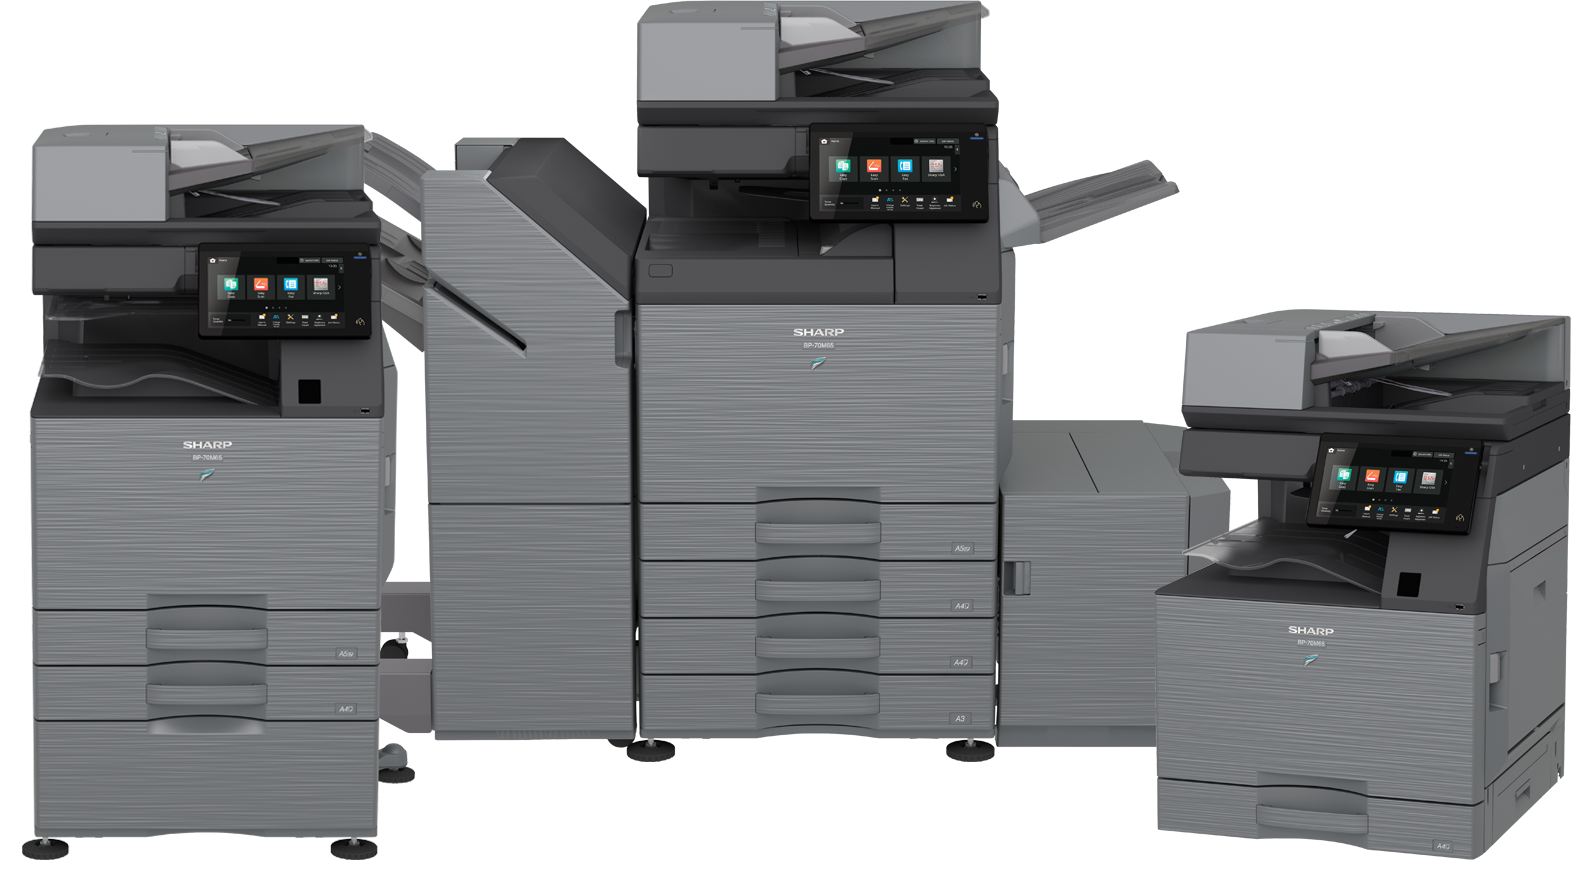 SHARP CR5 Copier Printer all in one